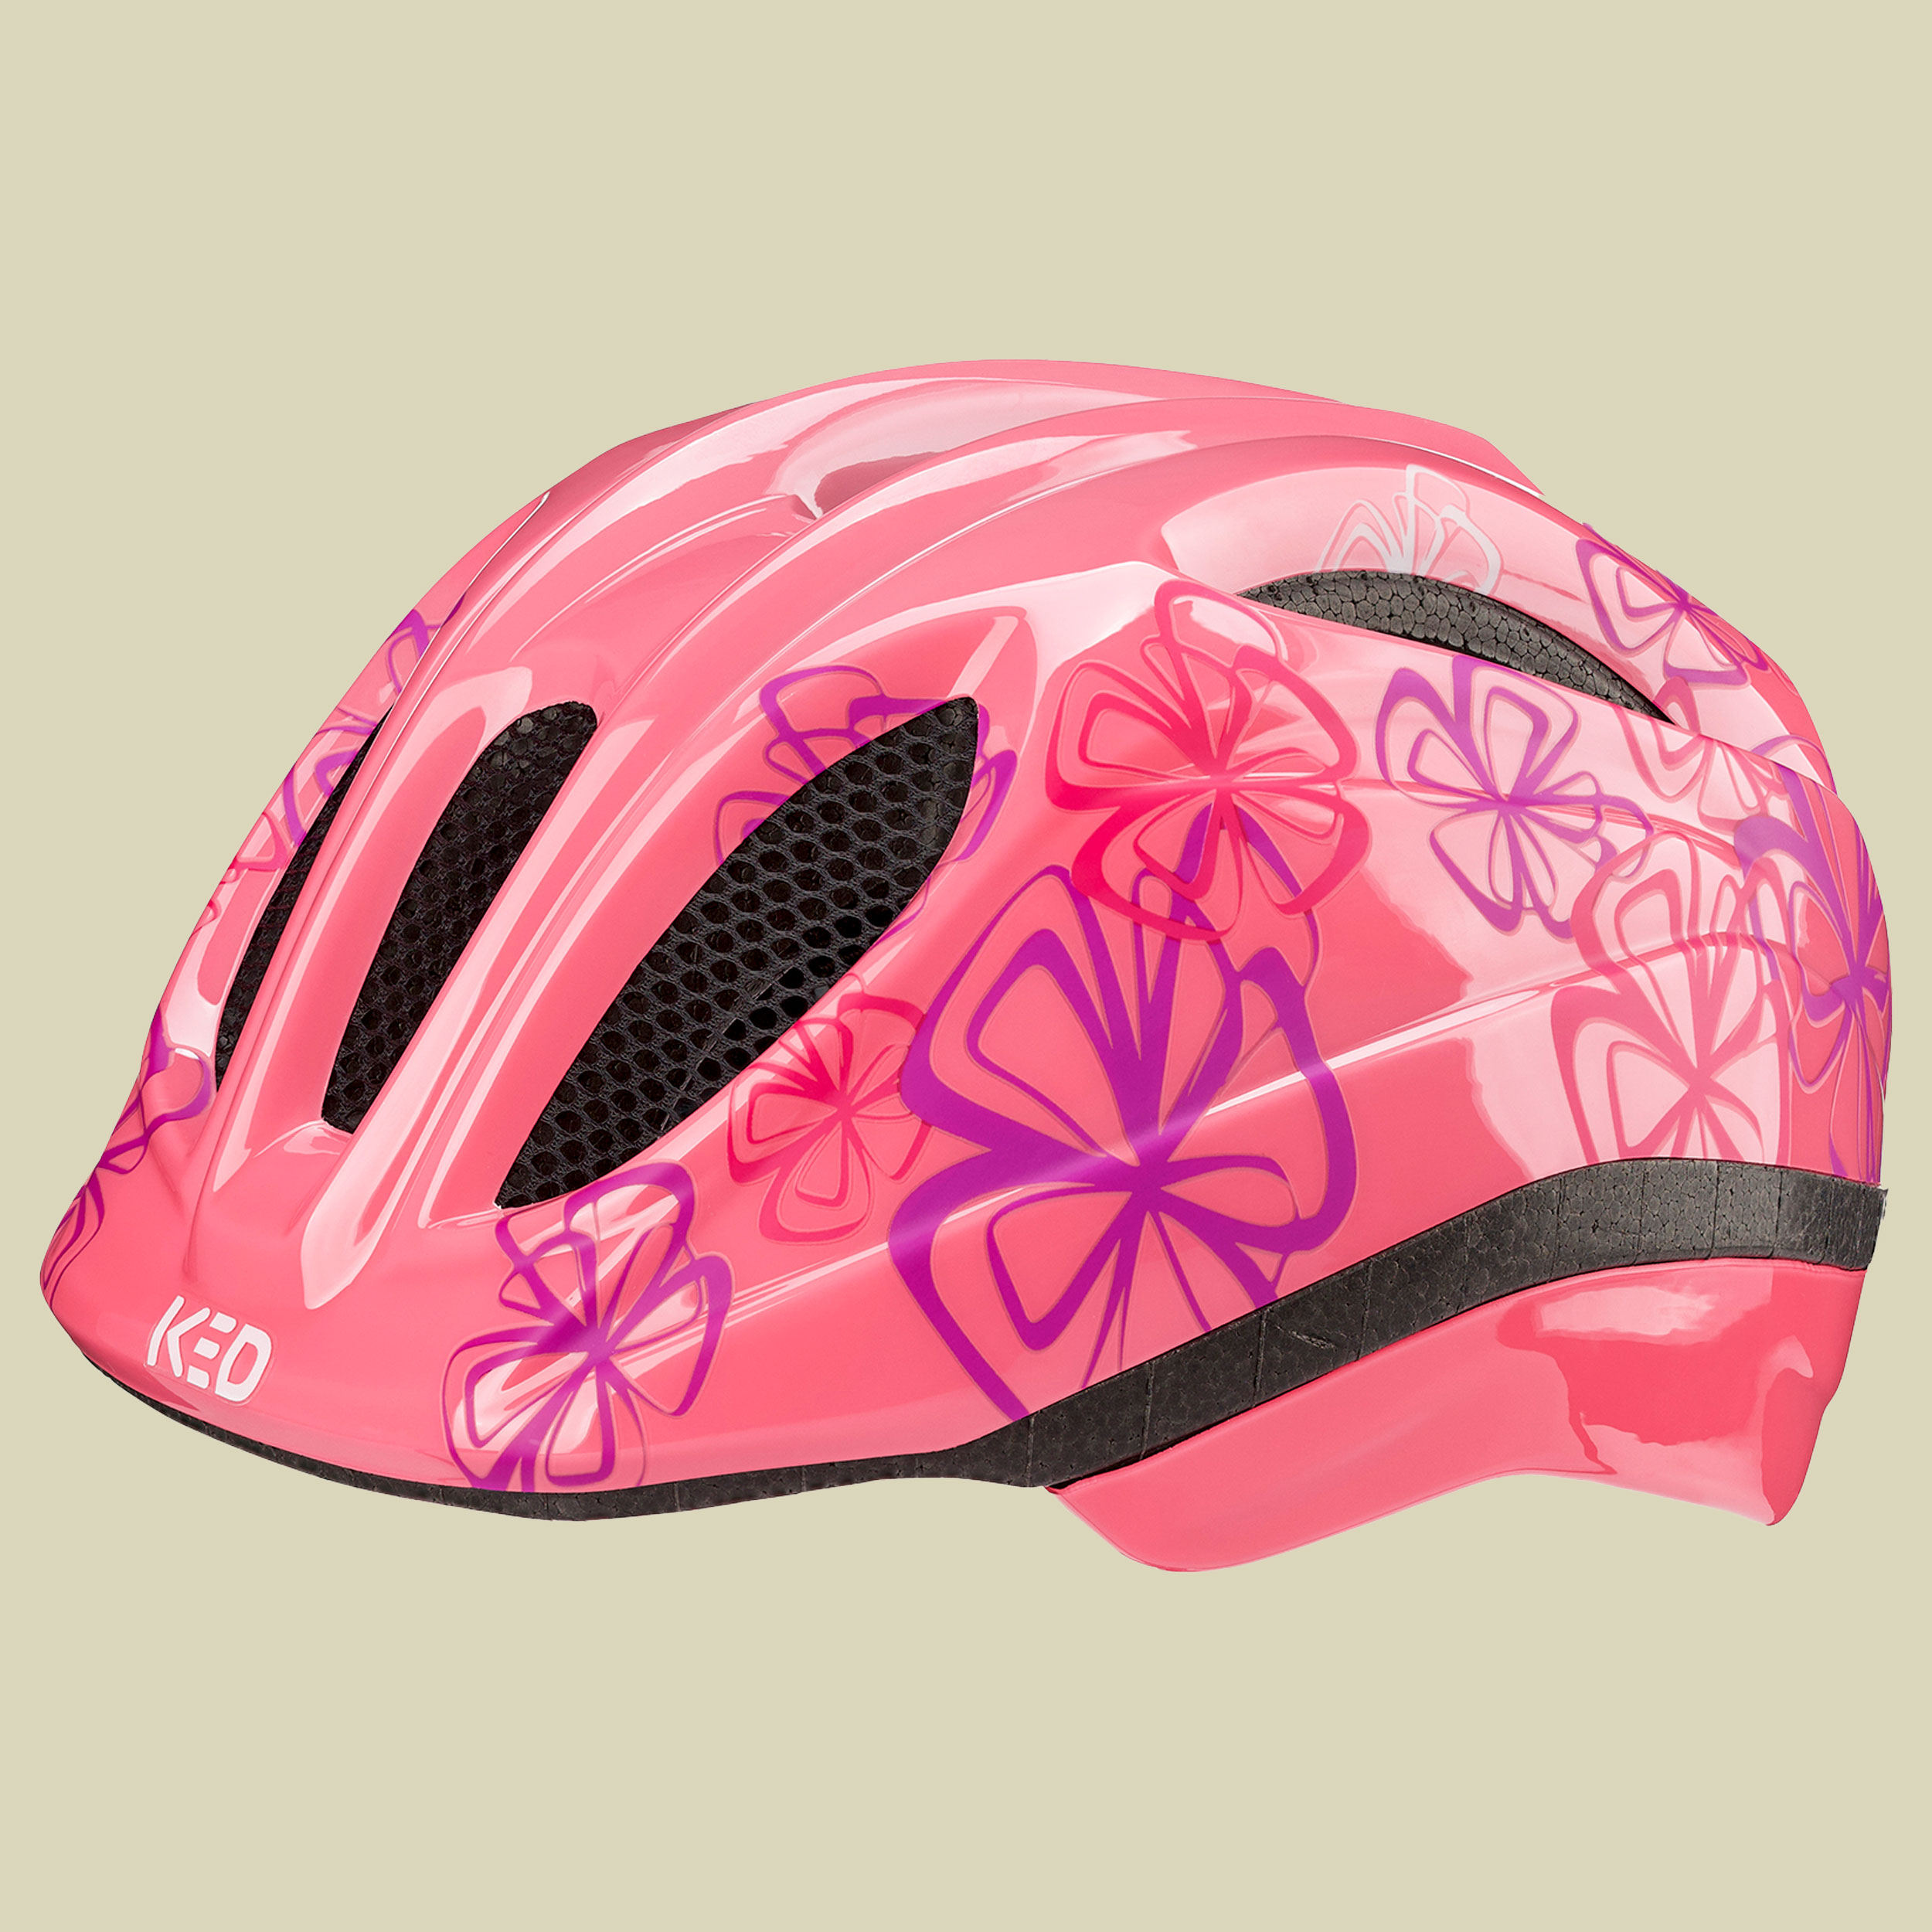 Meggy II Trend Kopfumfang S 46-51 Farbe soft pink flower glossy